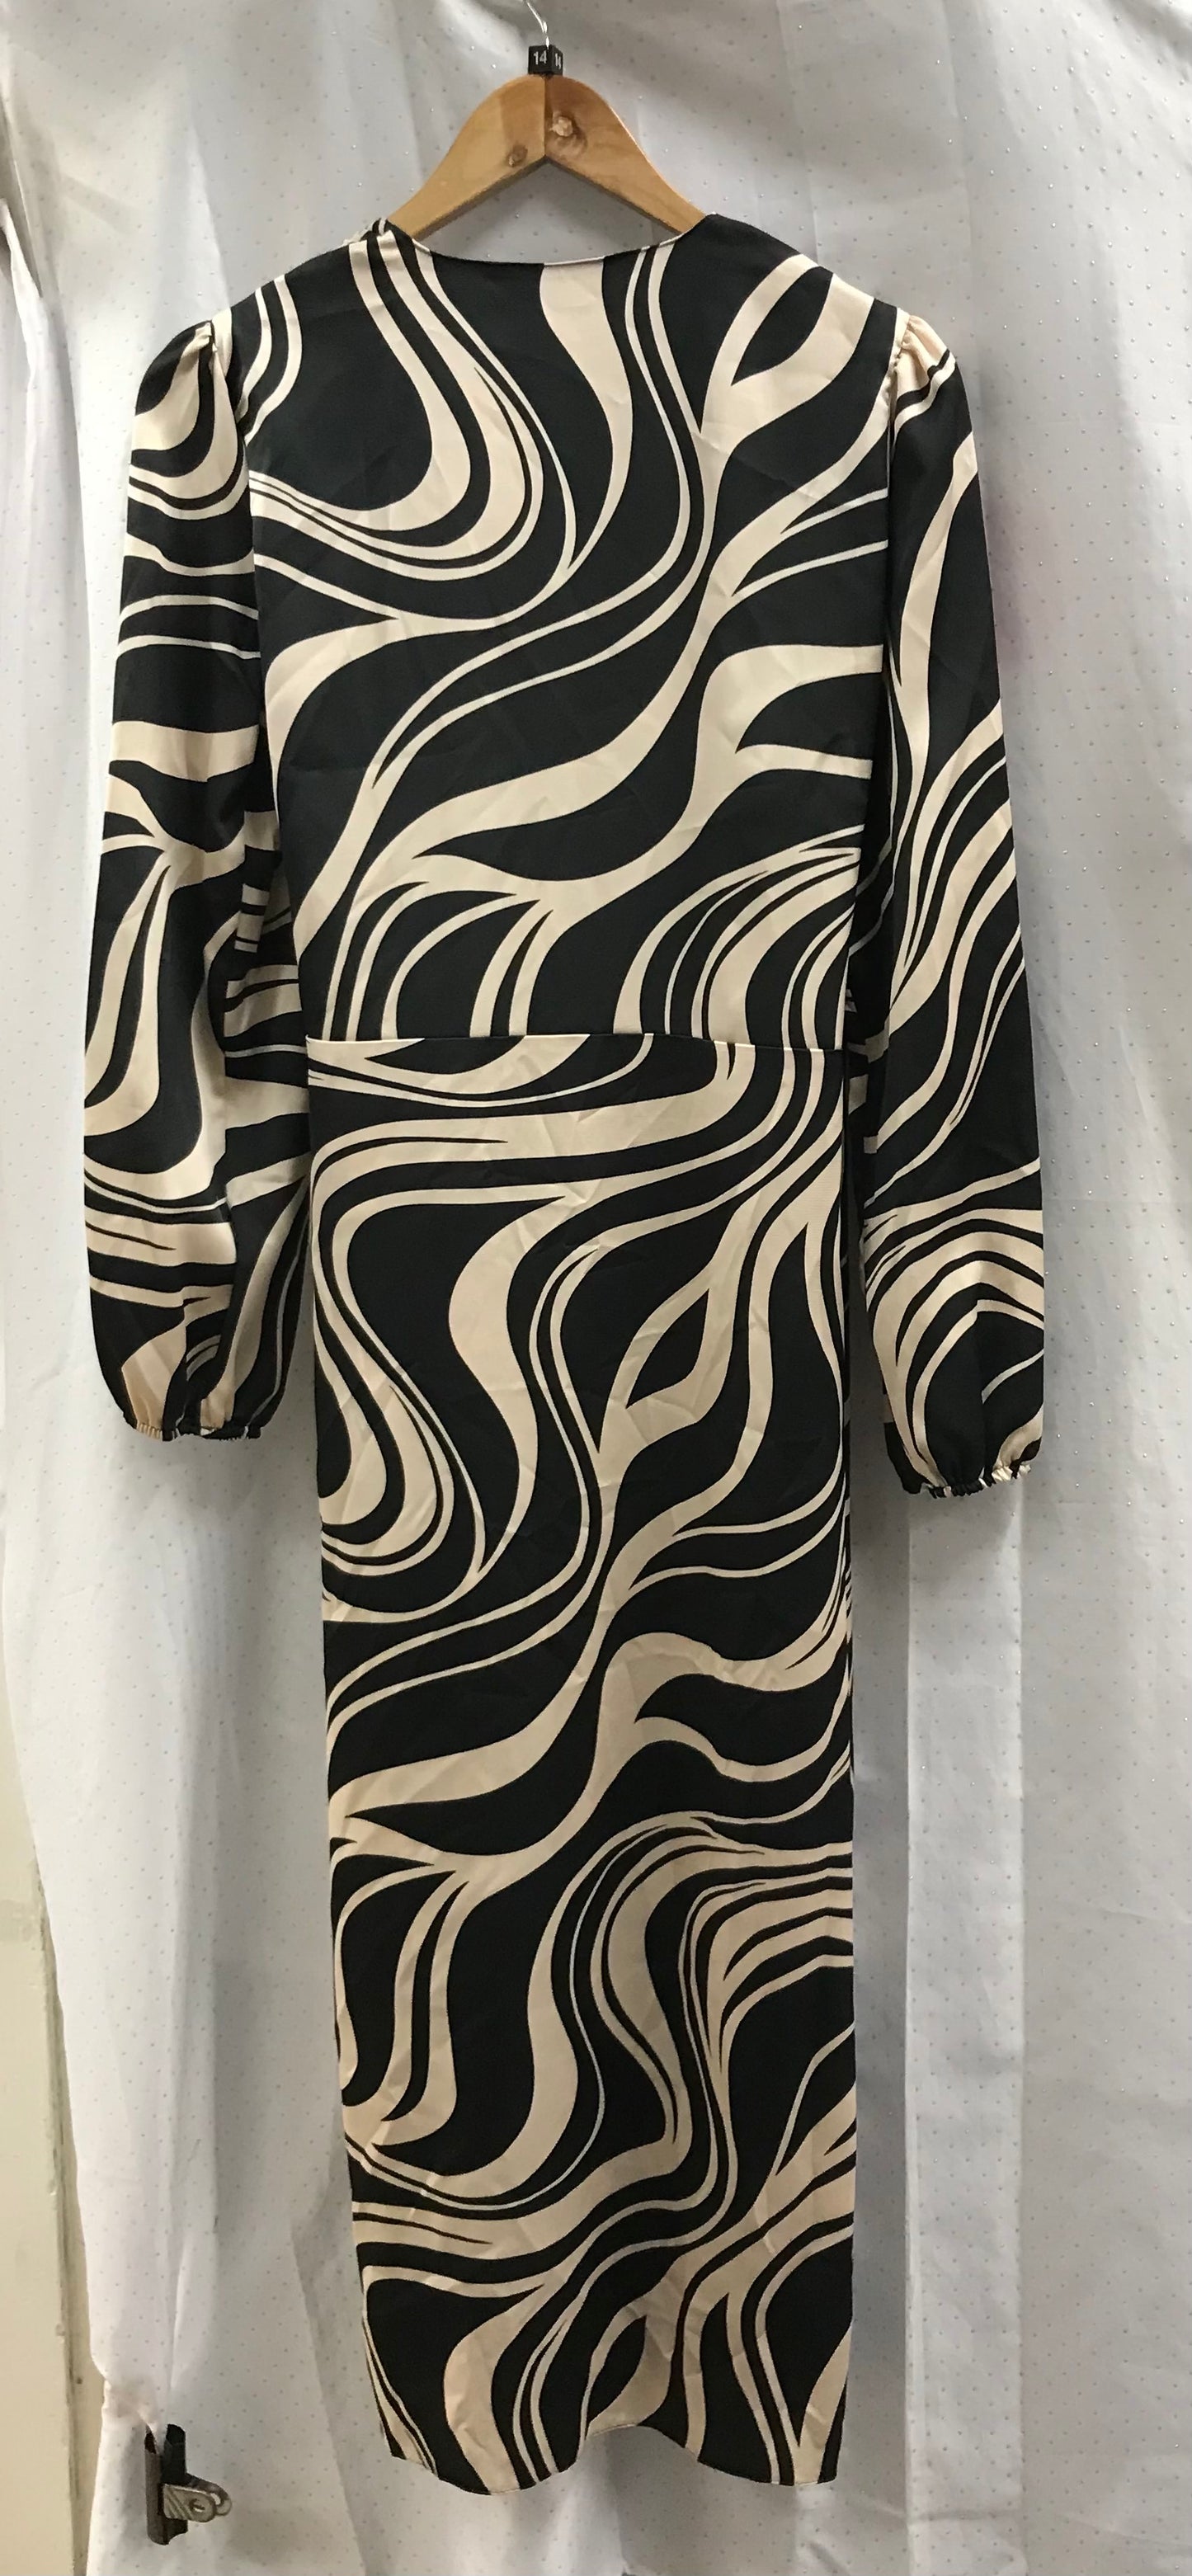 BNWT Size 14 Black and Cream Wrap Around Maxi Dress